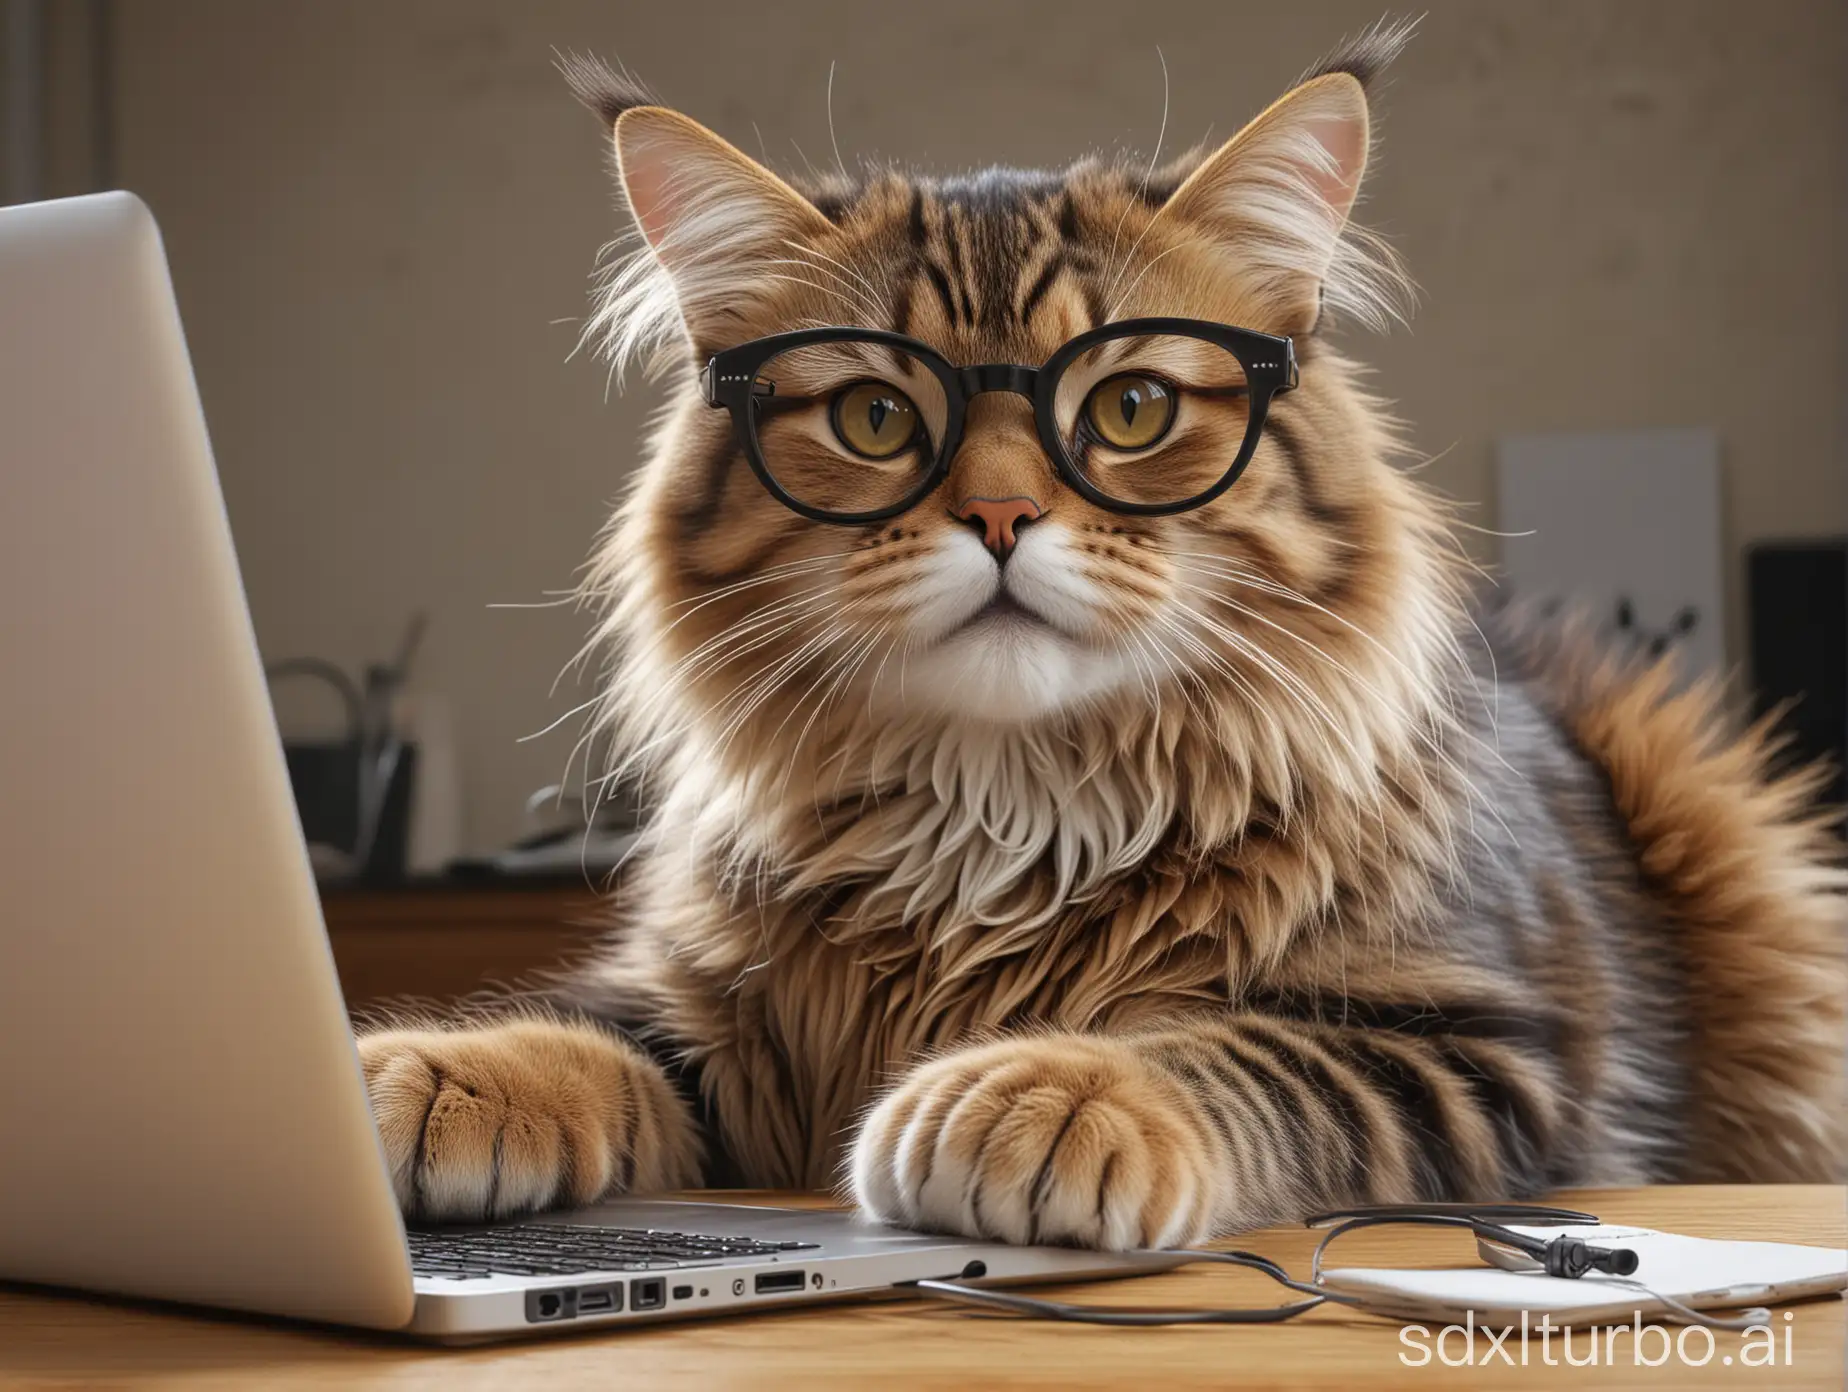 Smart-Cat-Wearing-Glasses-Works-on-Laptop